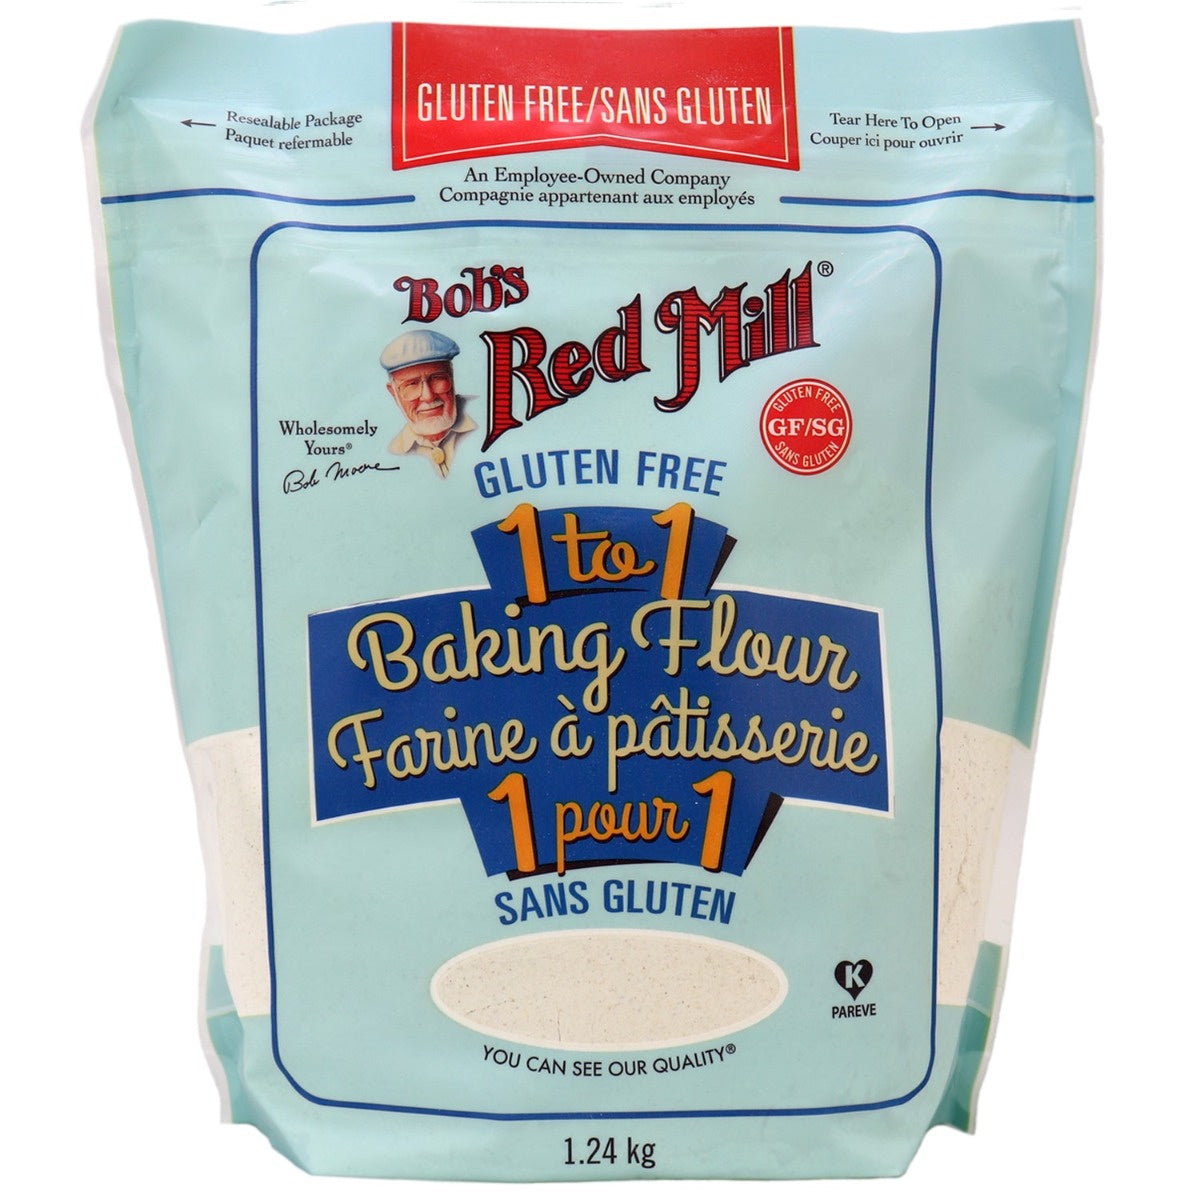 Bob's Red Mill Gluten-Free 1 to 1 Baking Flour 1.24kg